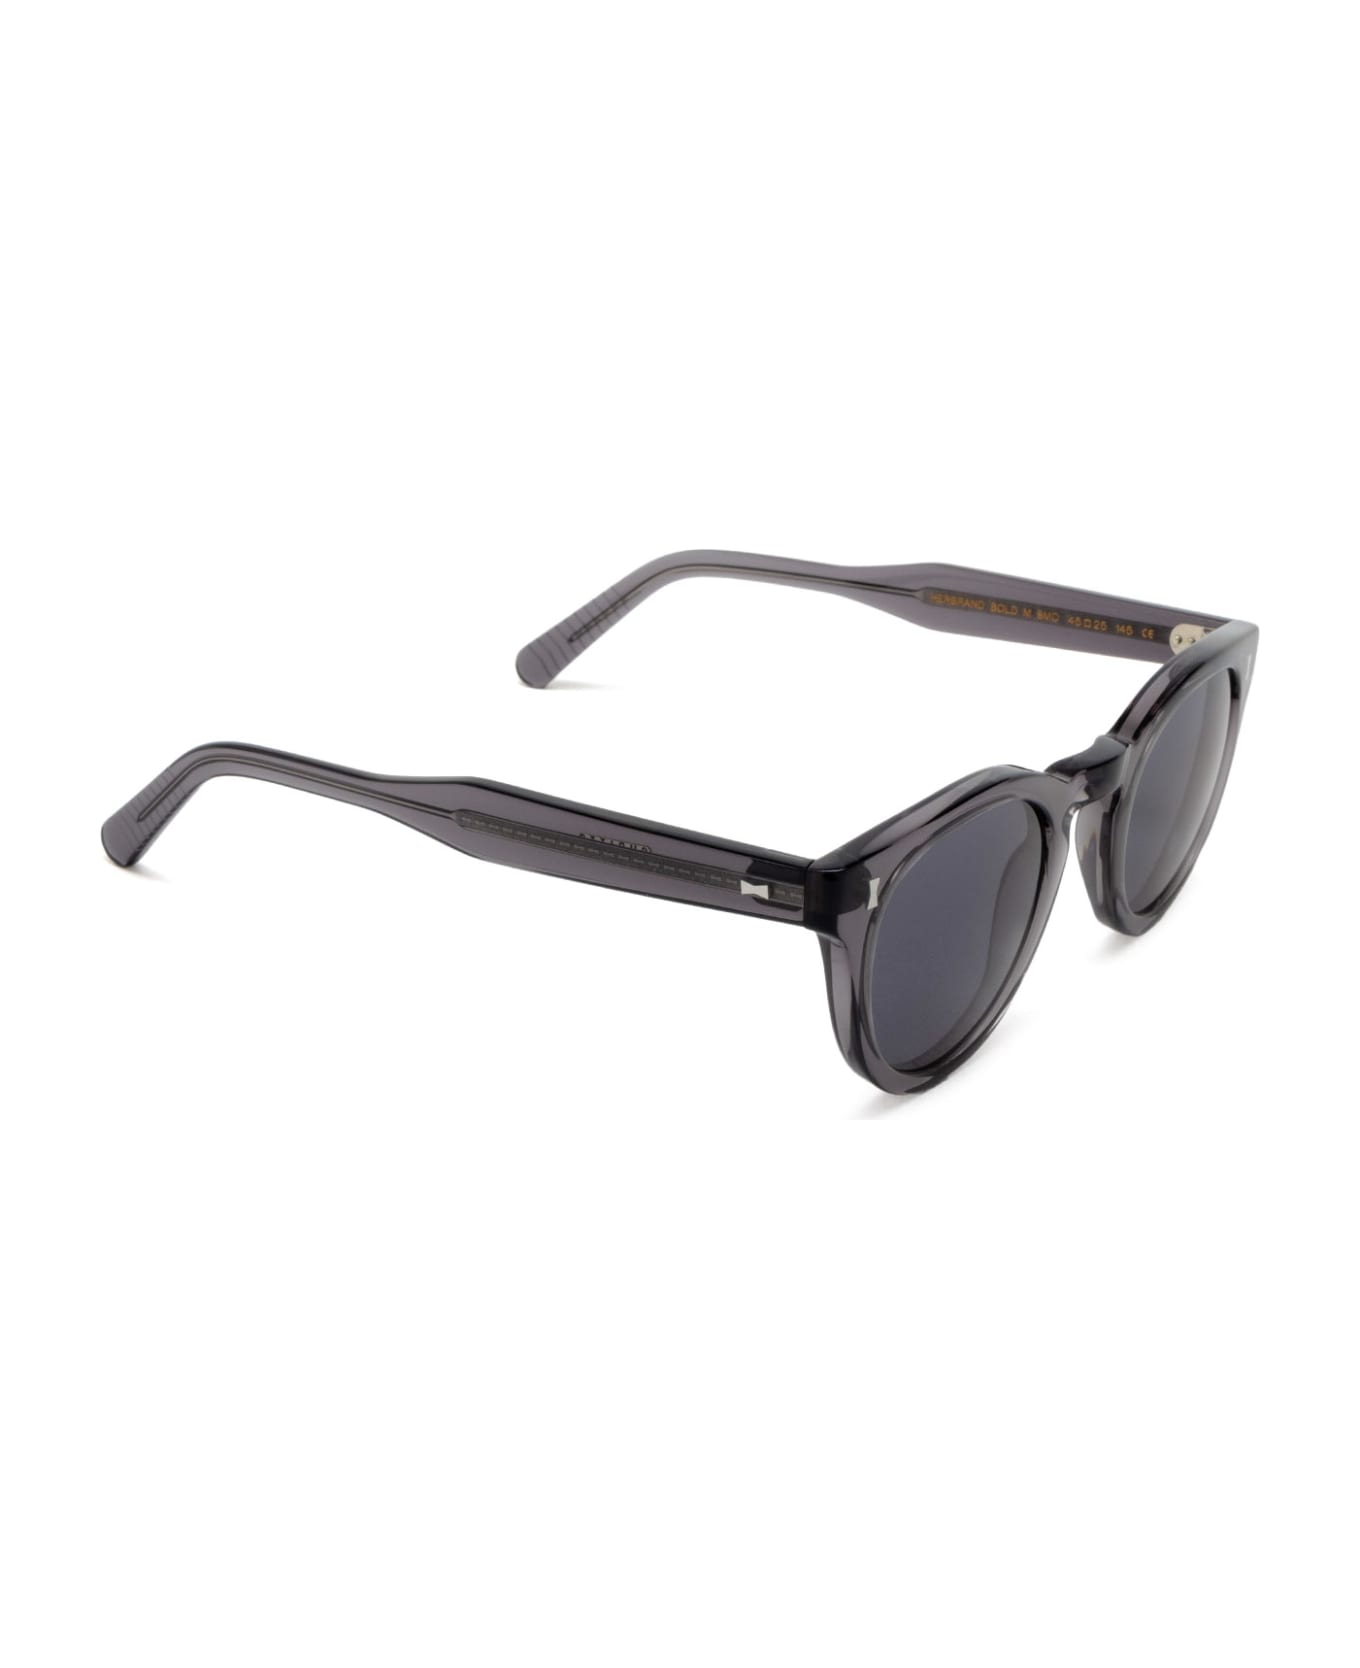 Cubitts Herbrand Bold Sun Smoke Grey Sunglasses - Smoke Grey